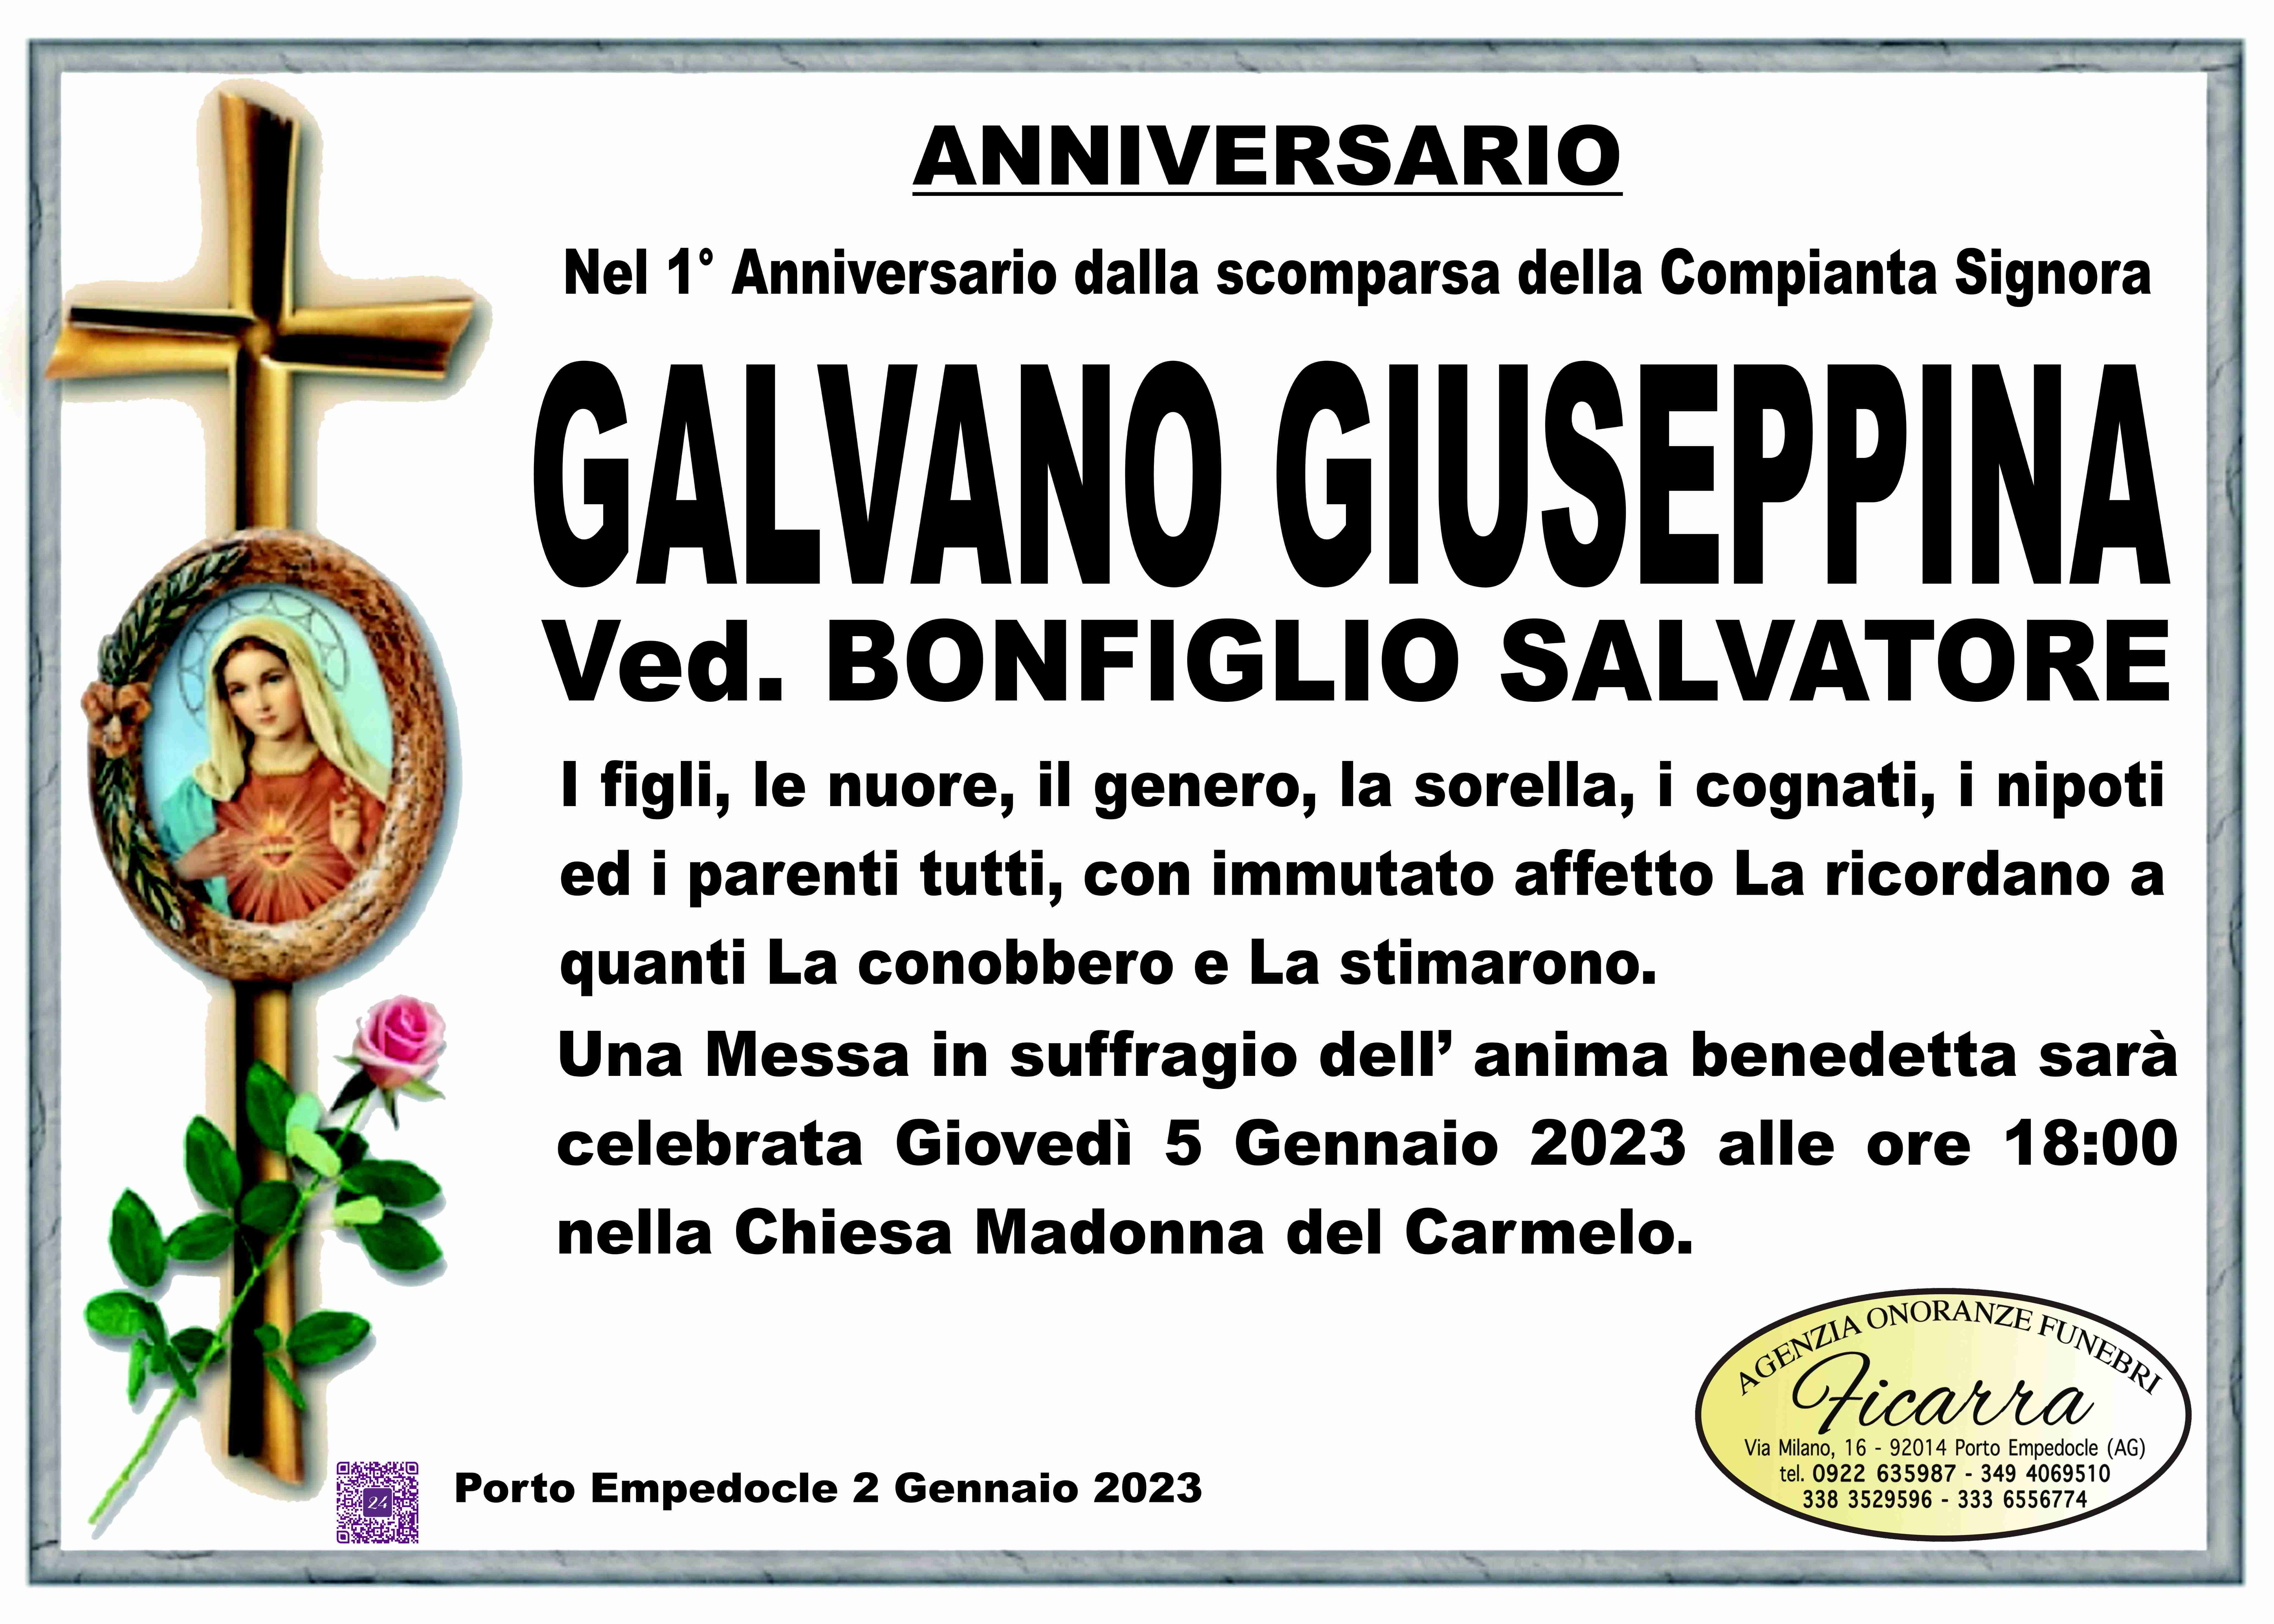 Giuseppina Galvano